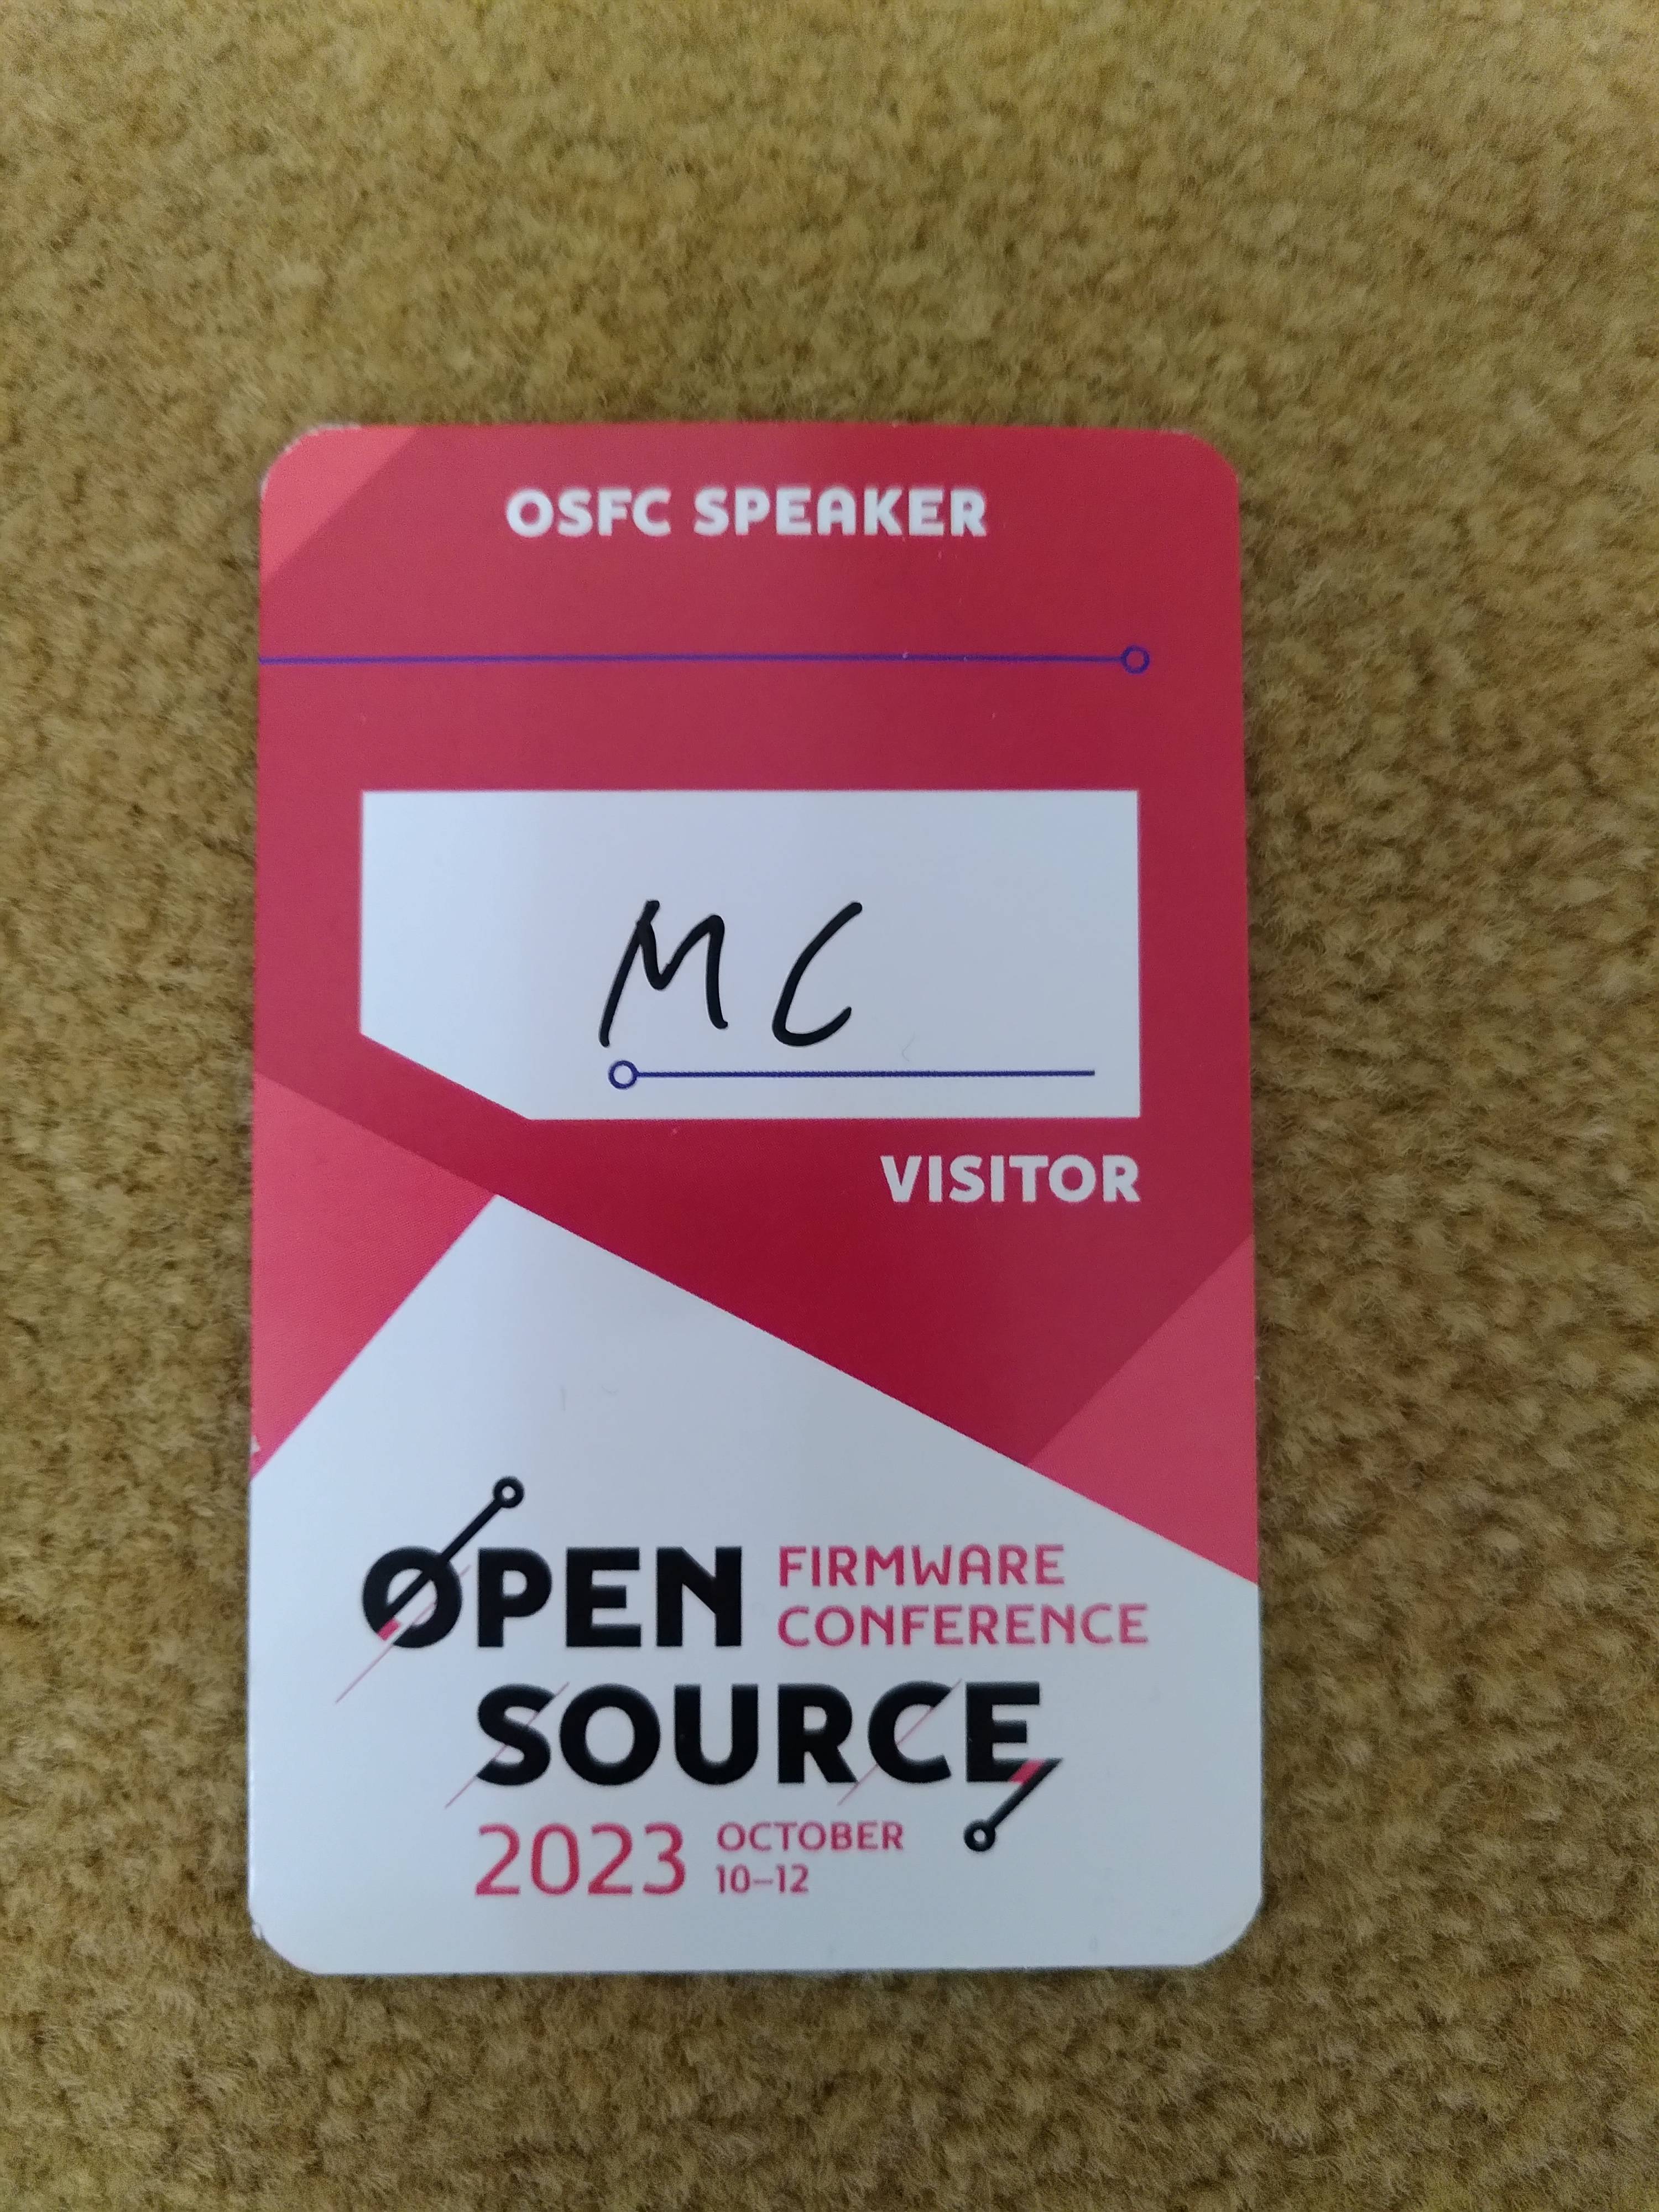 OSFC badge saying "Speaker" and handwritten by me, "MC".